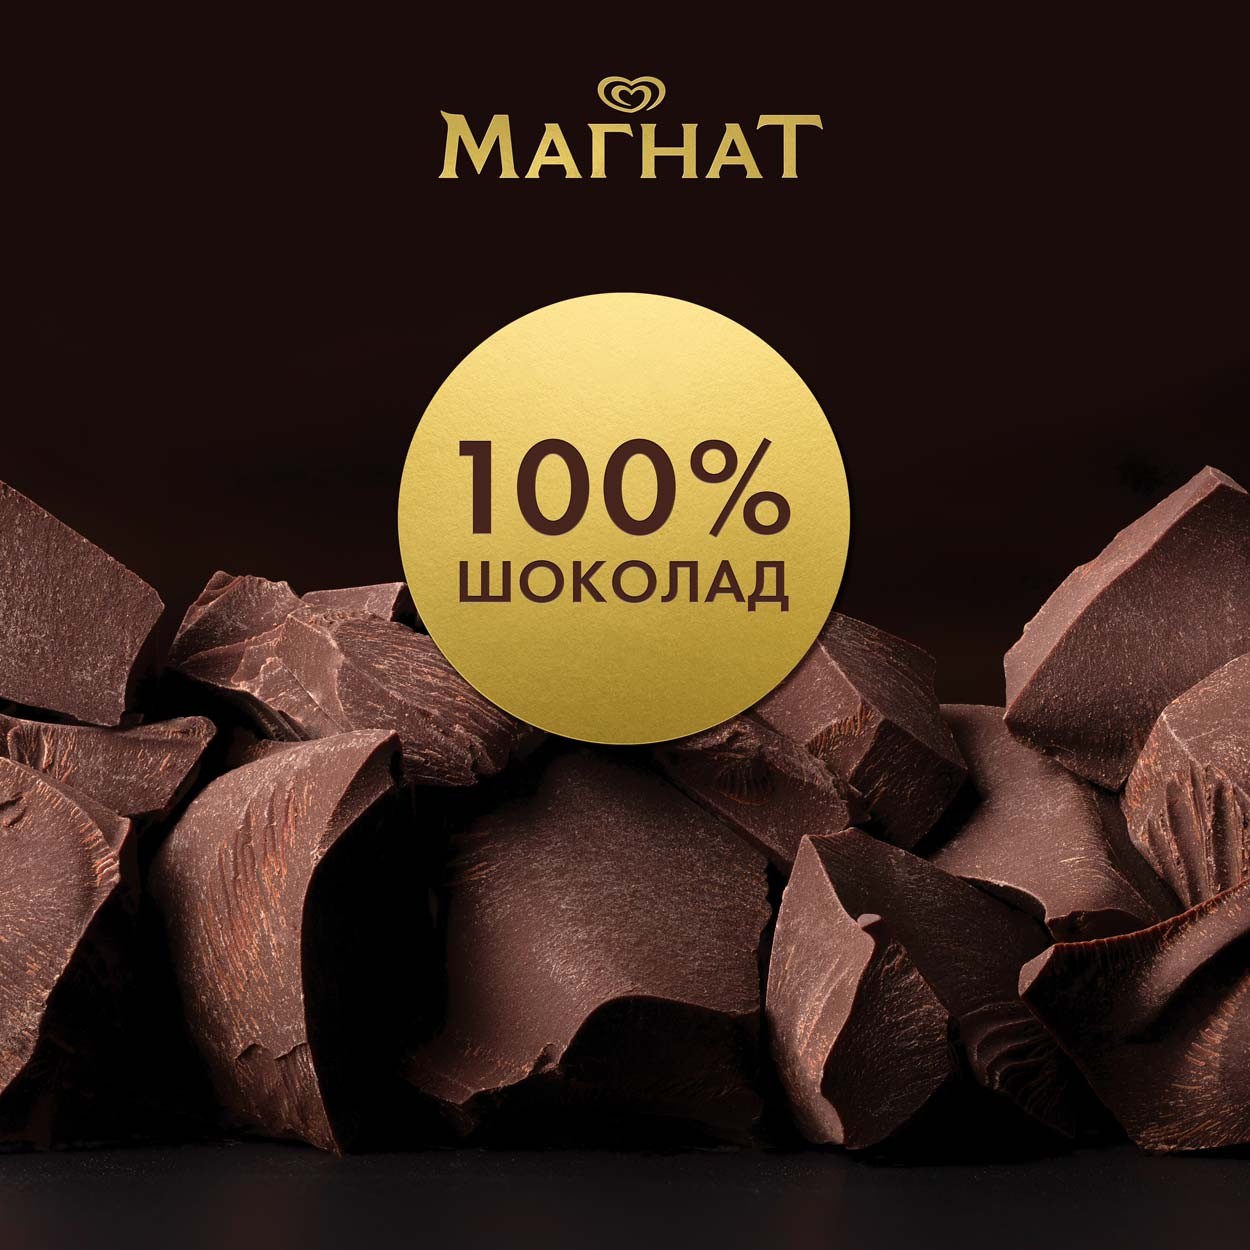 Магнат мороженое эскимо в шоколаде Фисташка - Малина 70 гр